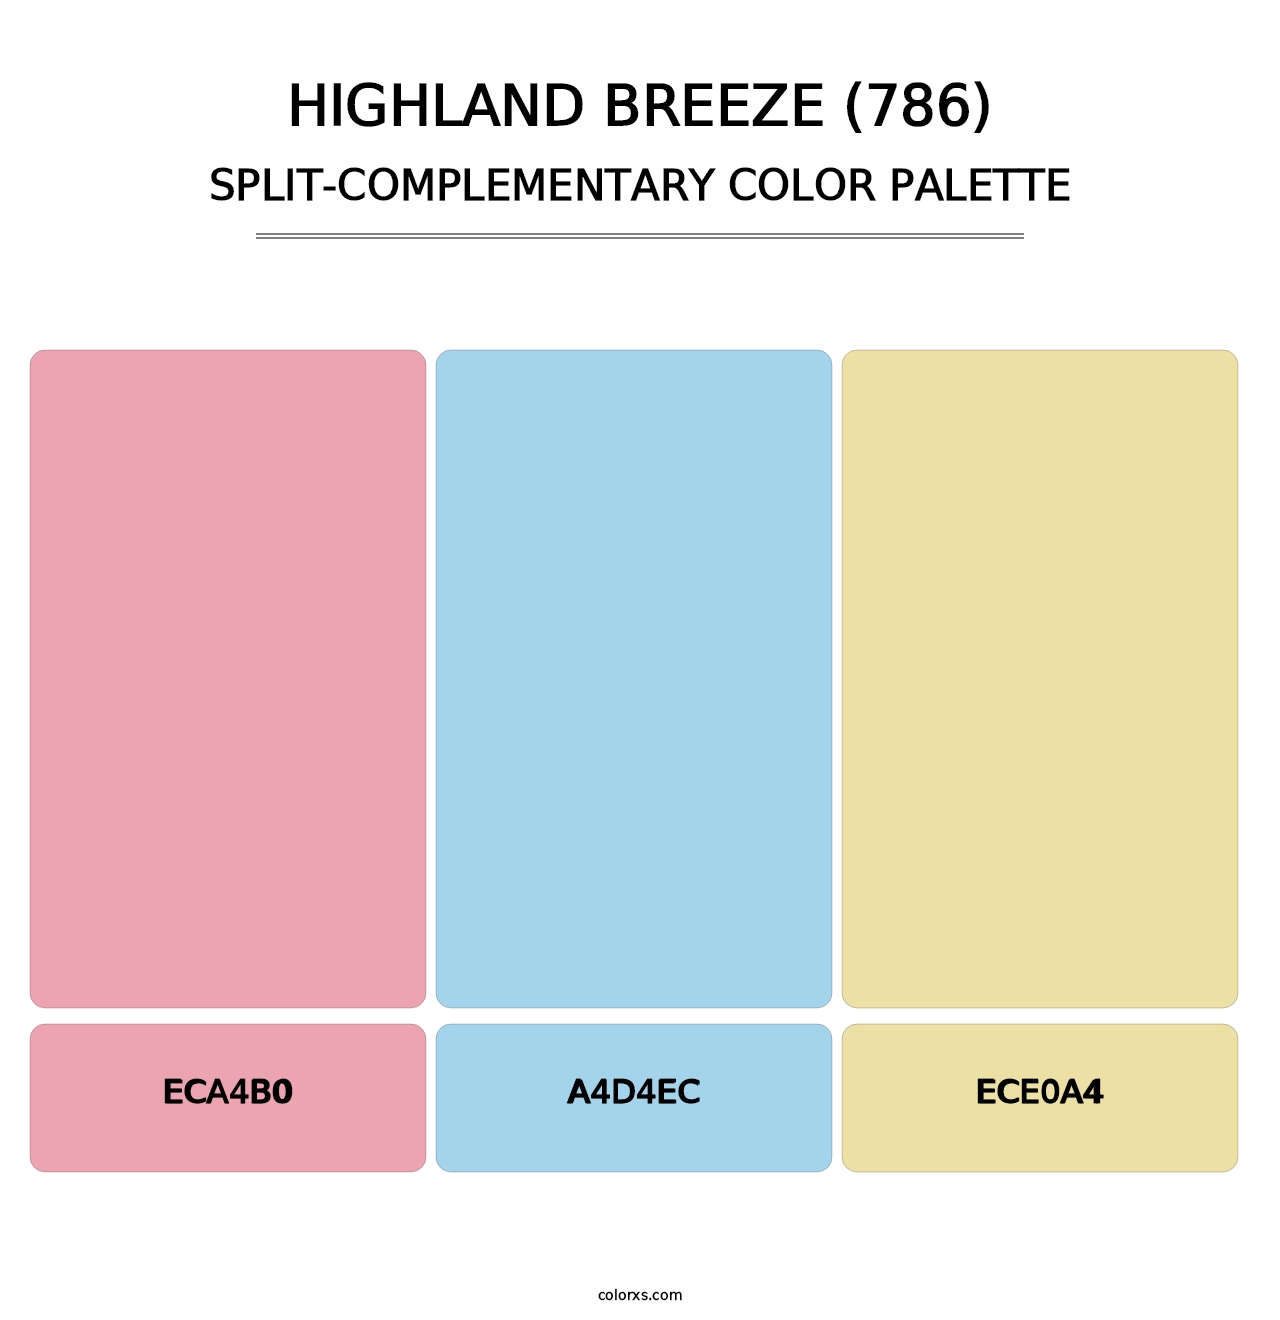 Highland Breeze (786) - Split-Complementary Color Palette